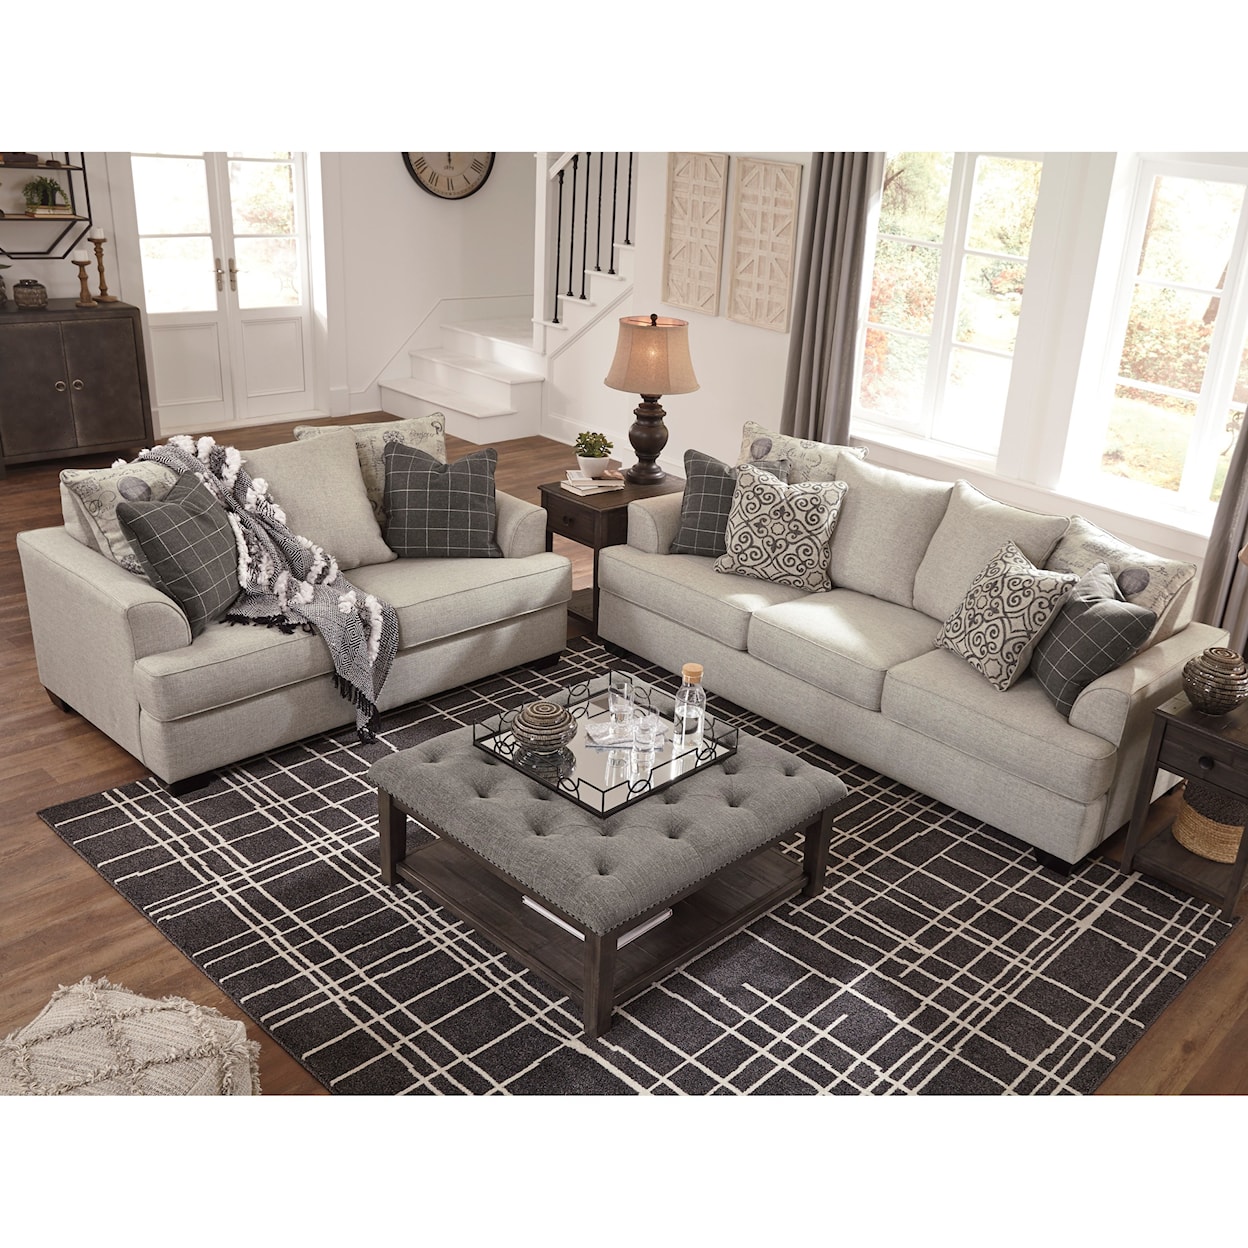 Ashley Furniture Signature Design Velletri Stationary Living Room Group